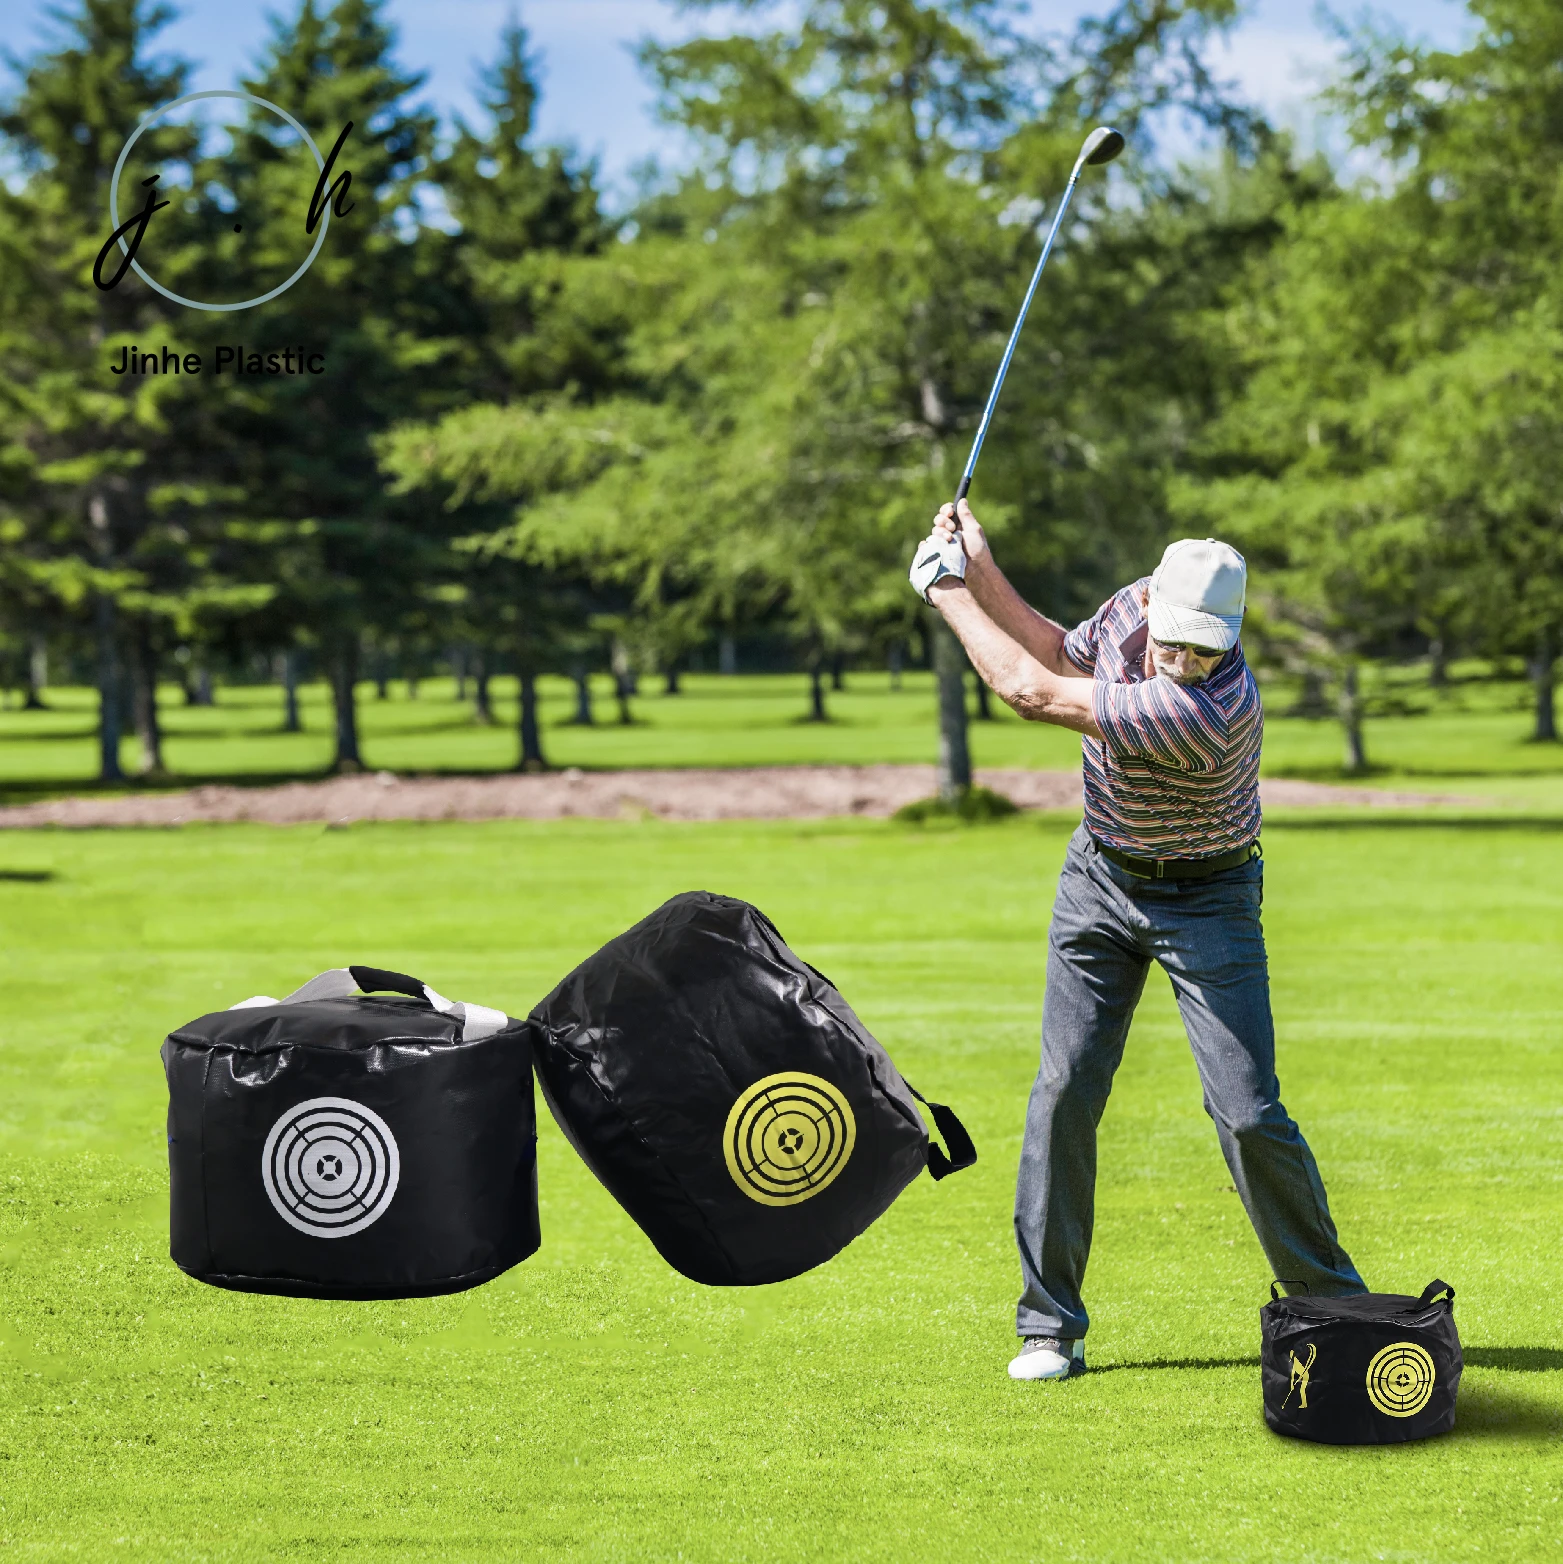 Swing Practice Golf Impact Power Smash Bag Impact Resistant Golf